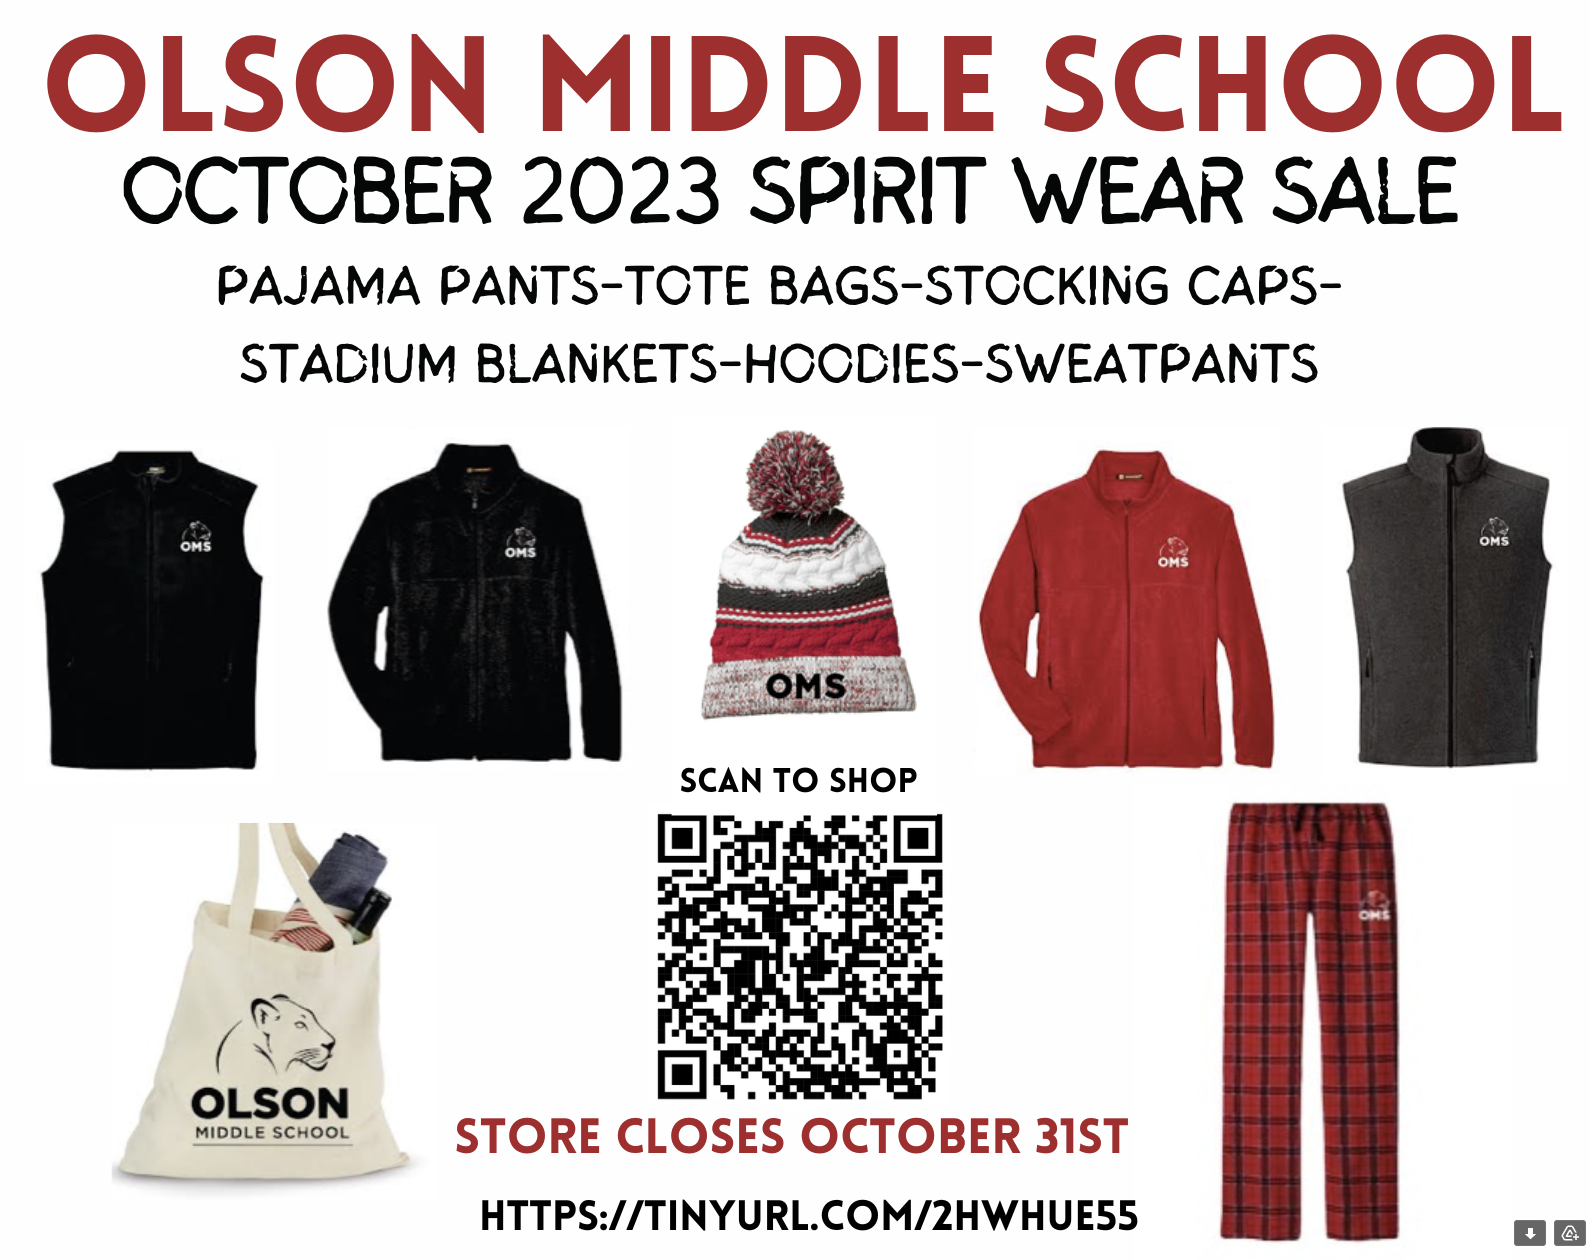 Olson Middle School Spirit Wear Sale poster